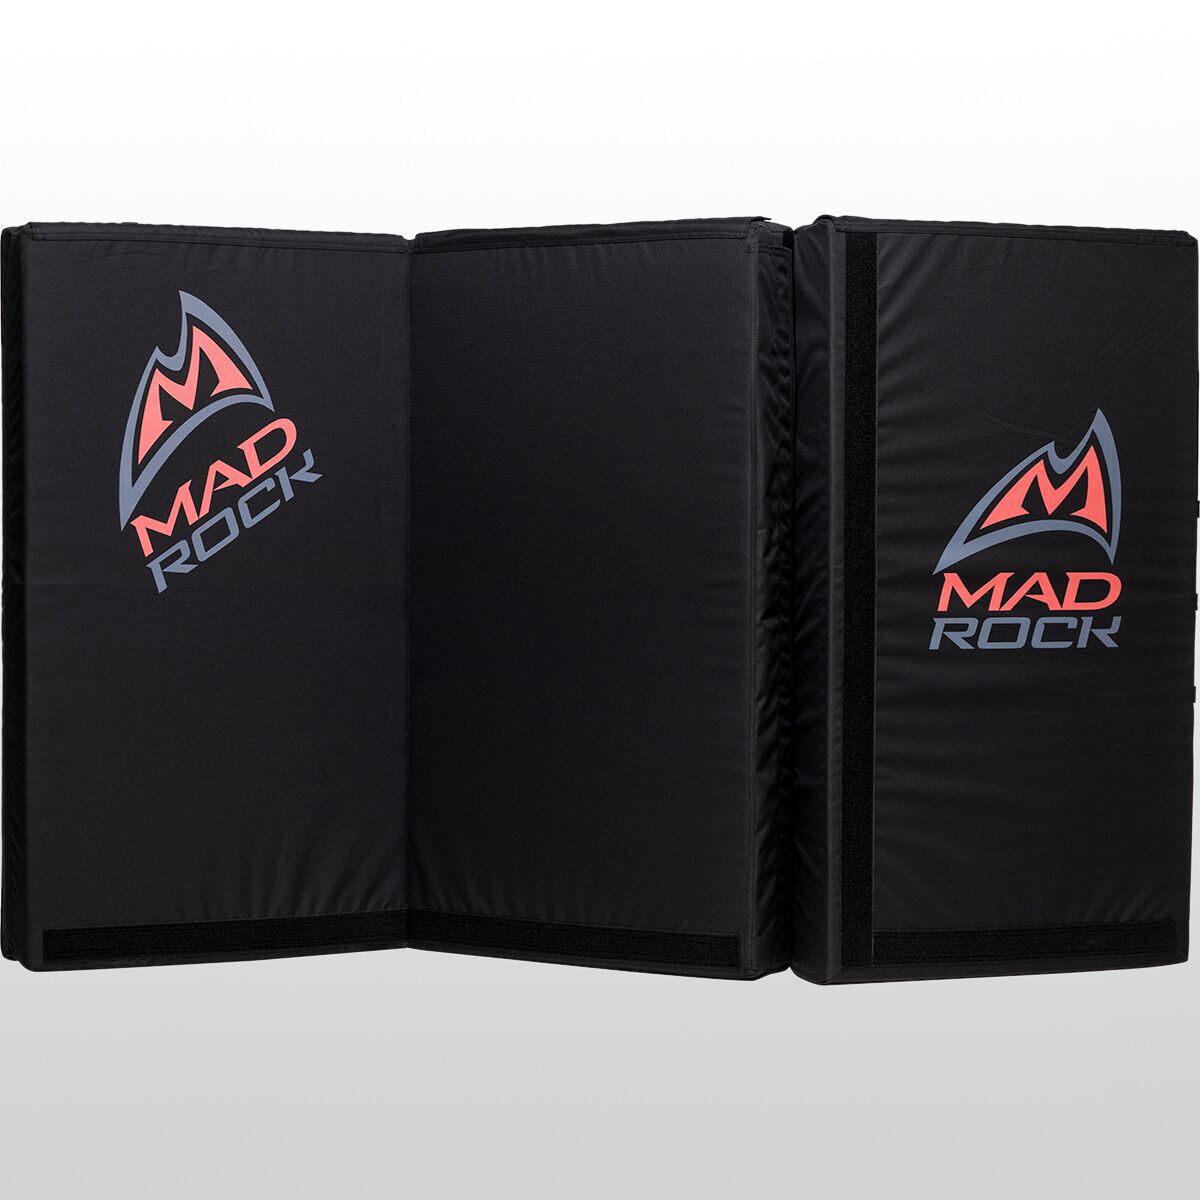 Mad Rock Triple Mad Pad